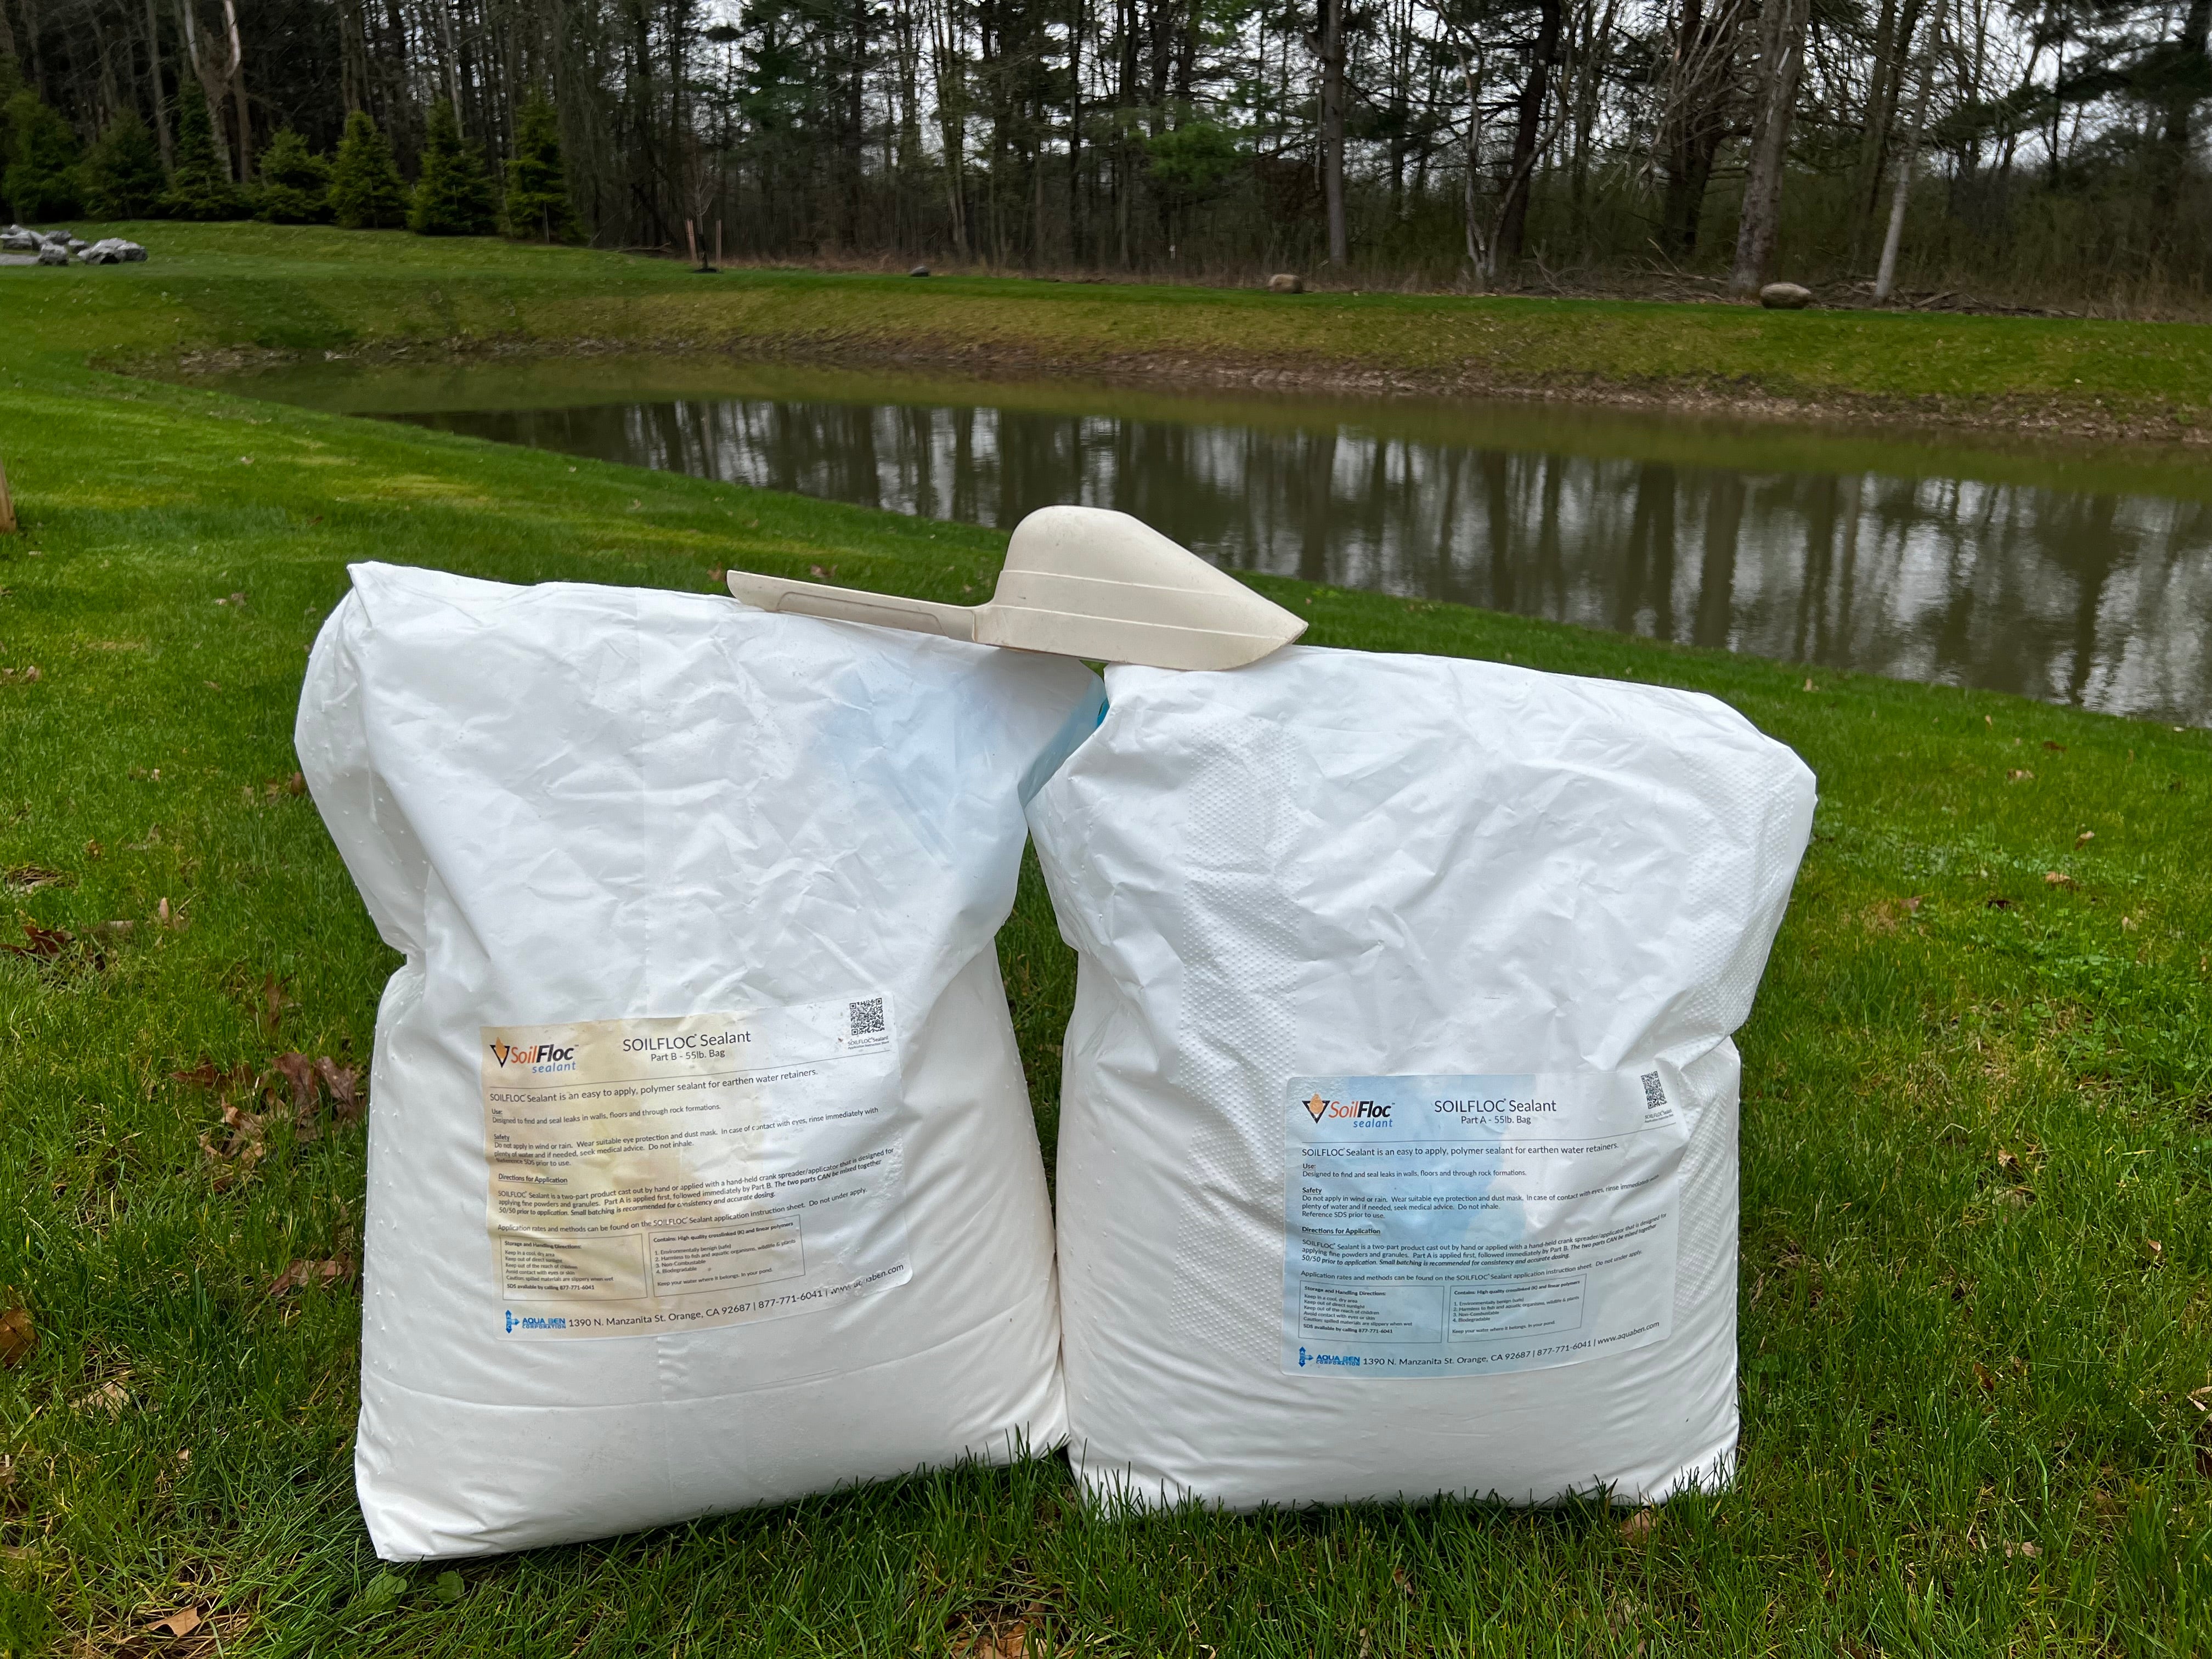 Soilfloc pond sealant bag